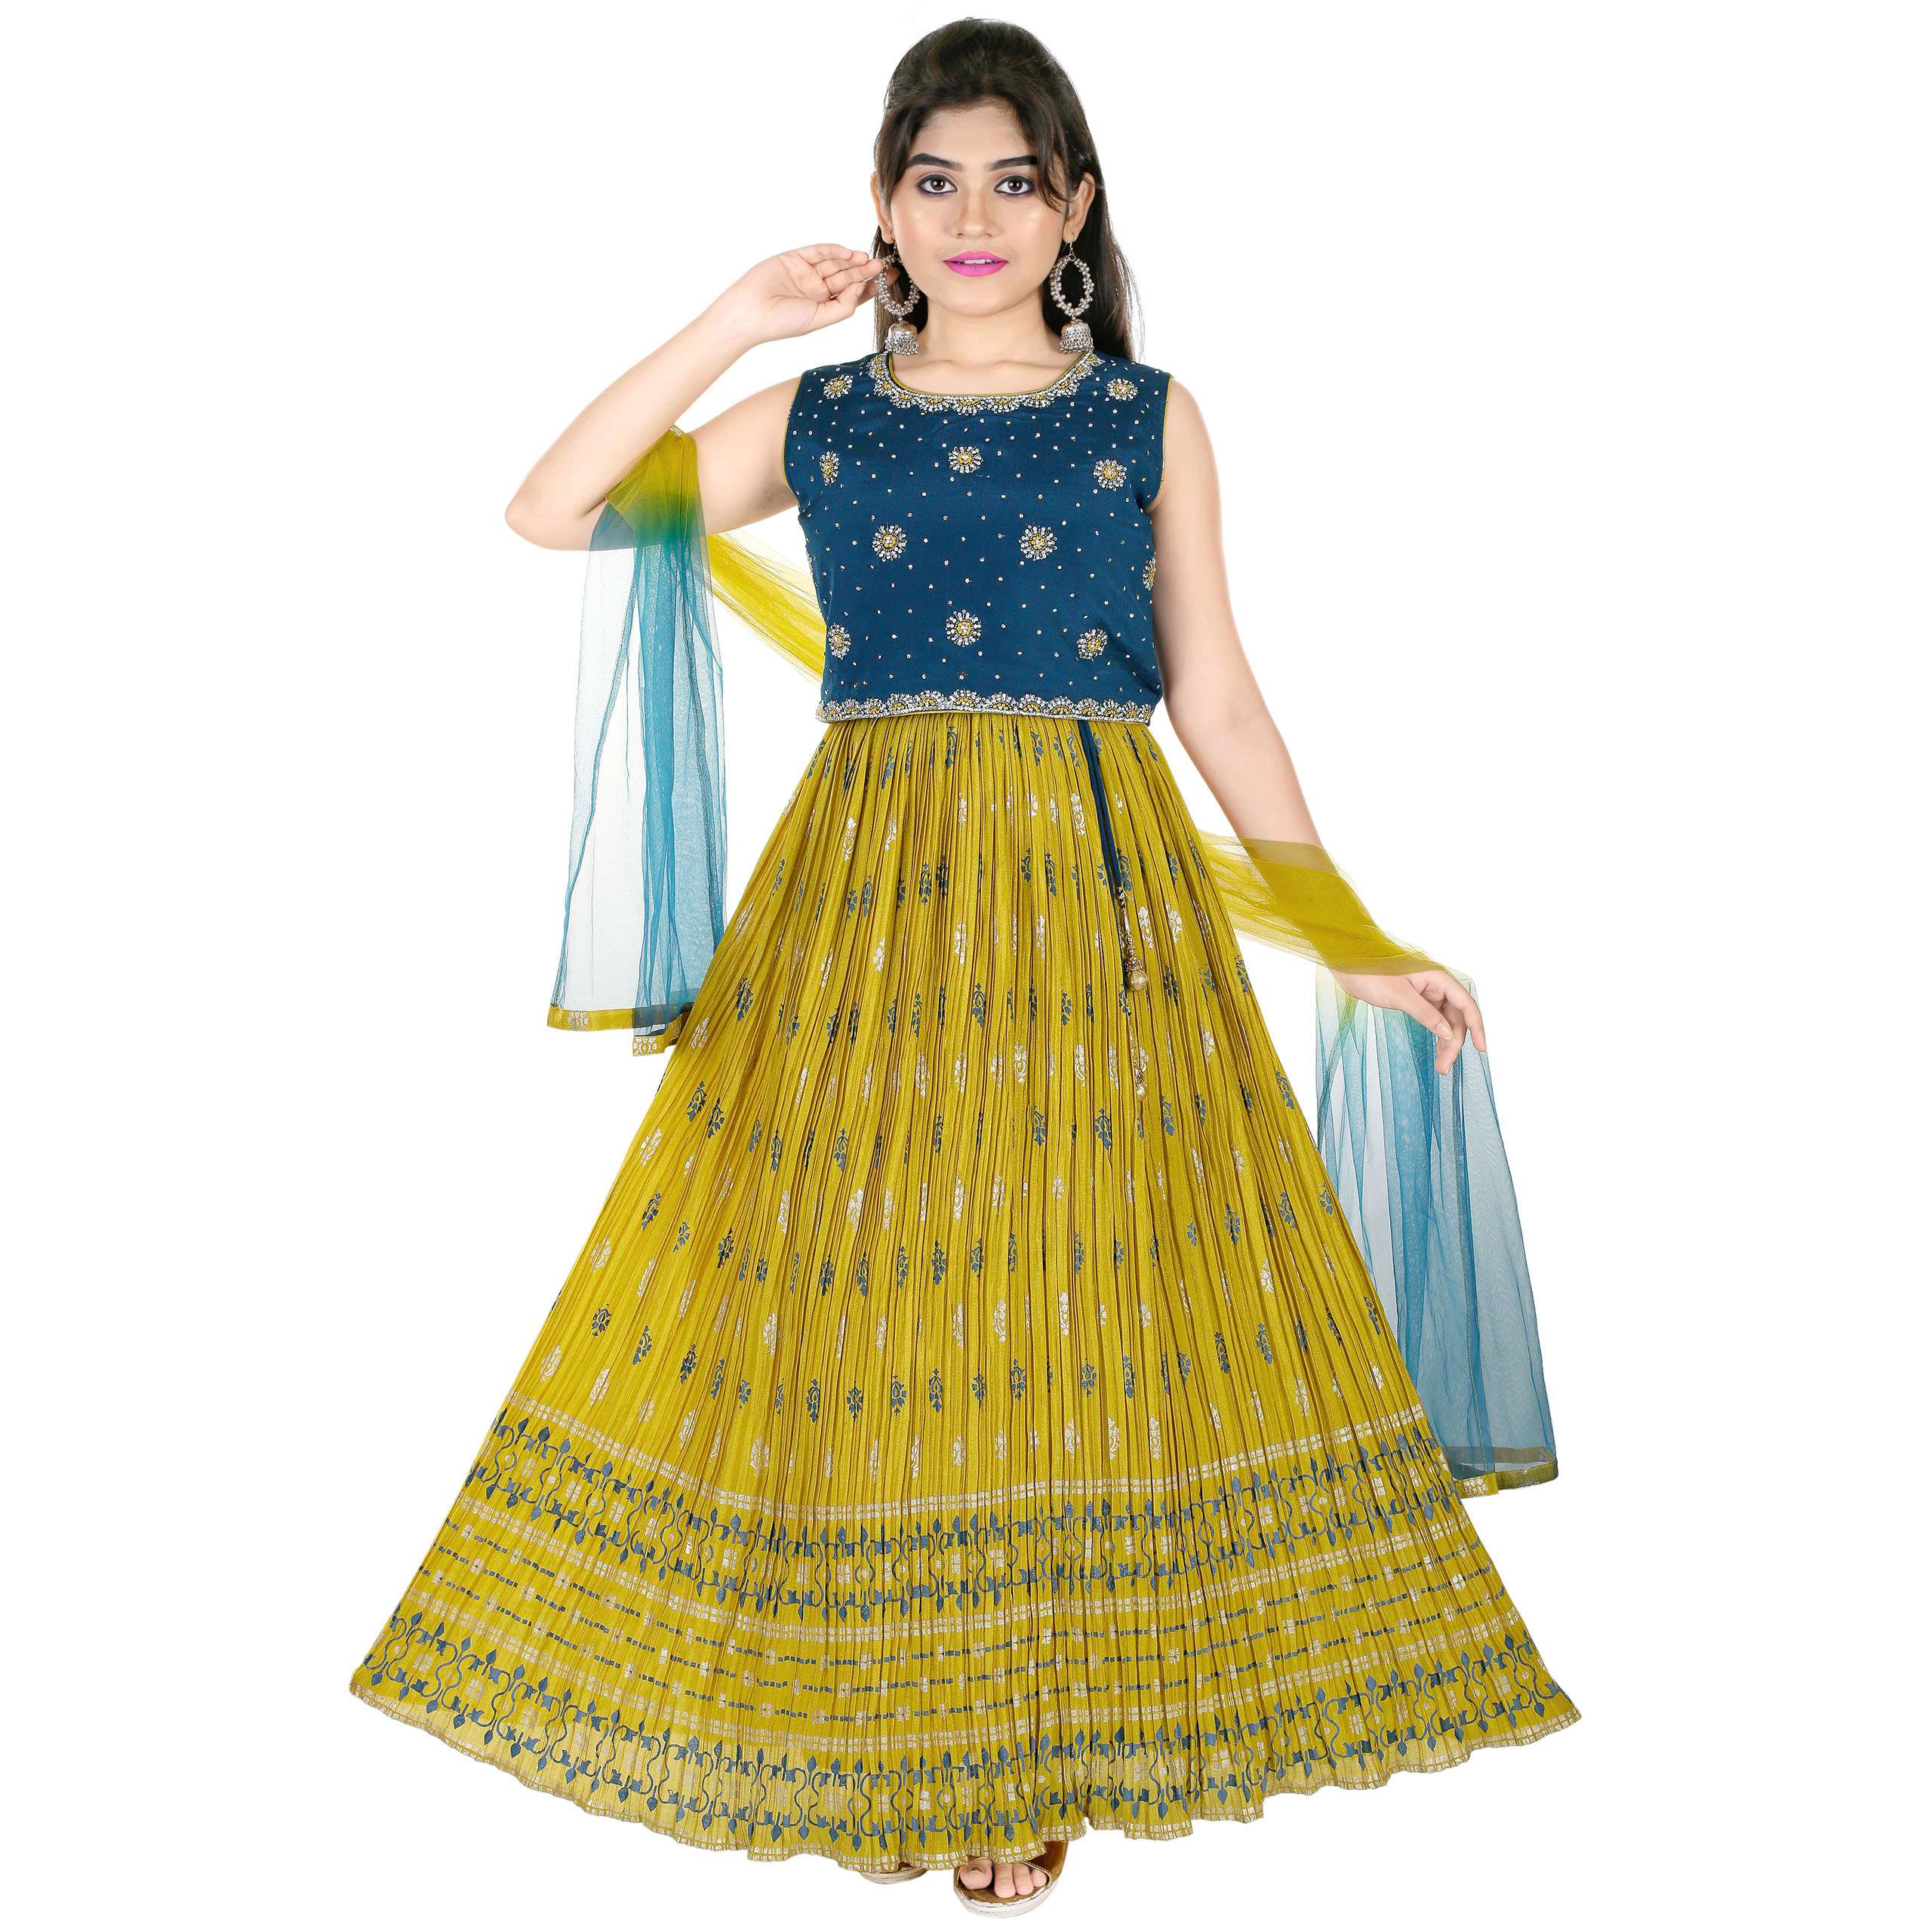 Balaji Emporium Presents Kids Wear Special Designer Indian Party Wear Anarkali Salwar Kameez Suit Girlish Dress Collection At Best Price 3023